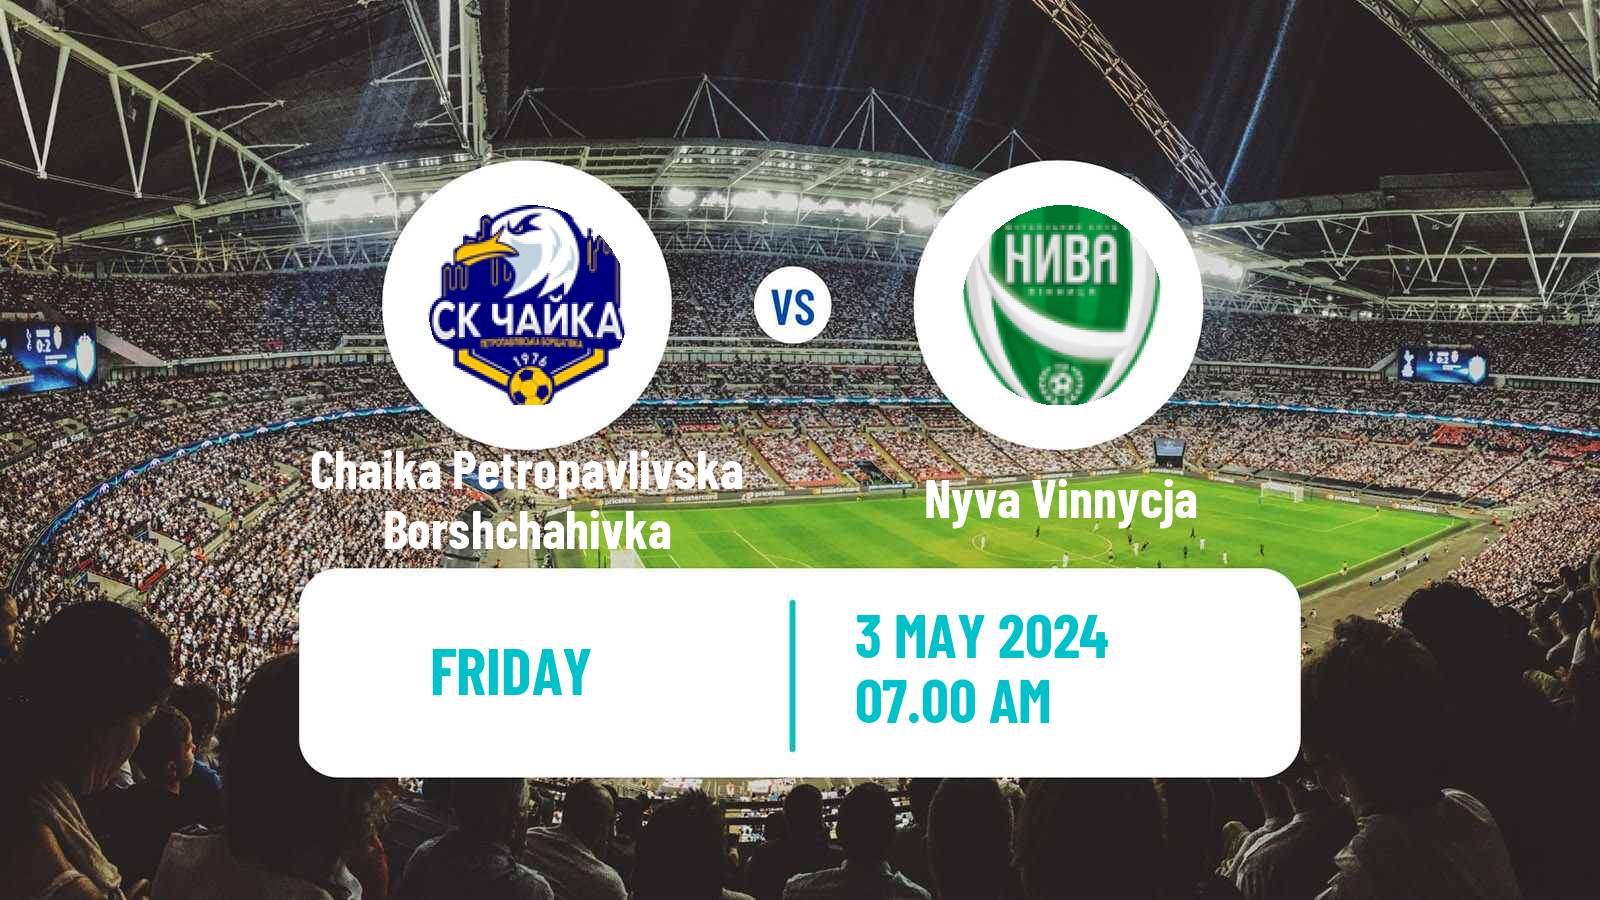 Soccer Ukrainian Druha Liga Chaika Petropavlivska Borshchahivka - Nyva Vinnycja